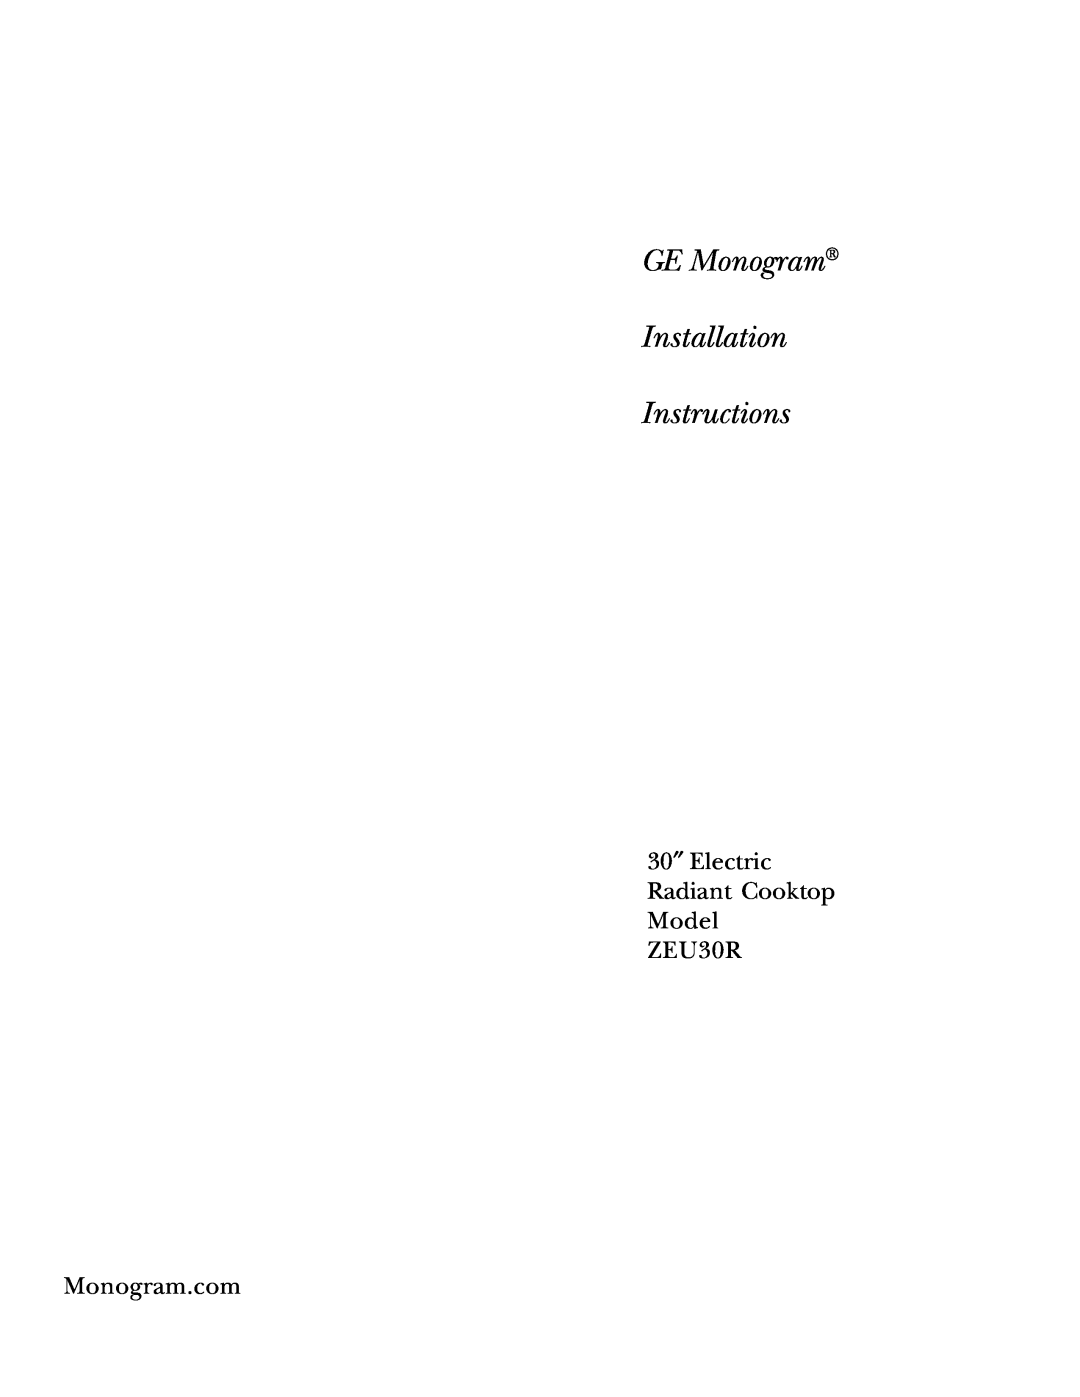 GE Monogram manual Manual, Touch Control, Models ZEU30R ZEU36R, OwneIS, Radiant Cooktop, Monogram, Webfinggood ingstoti 